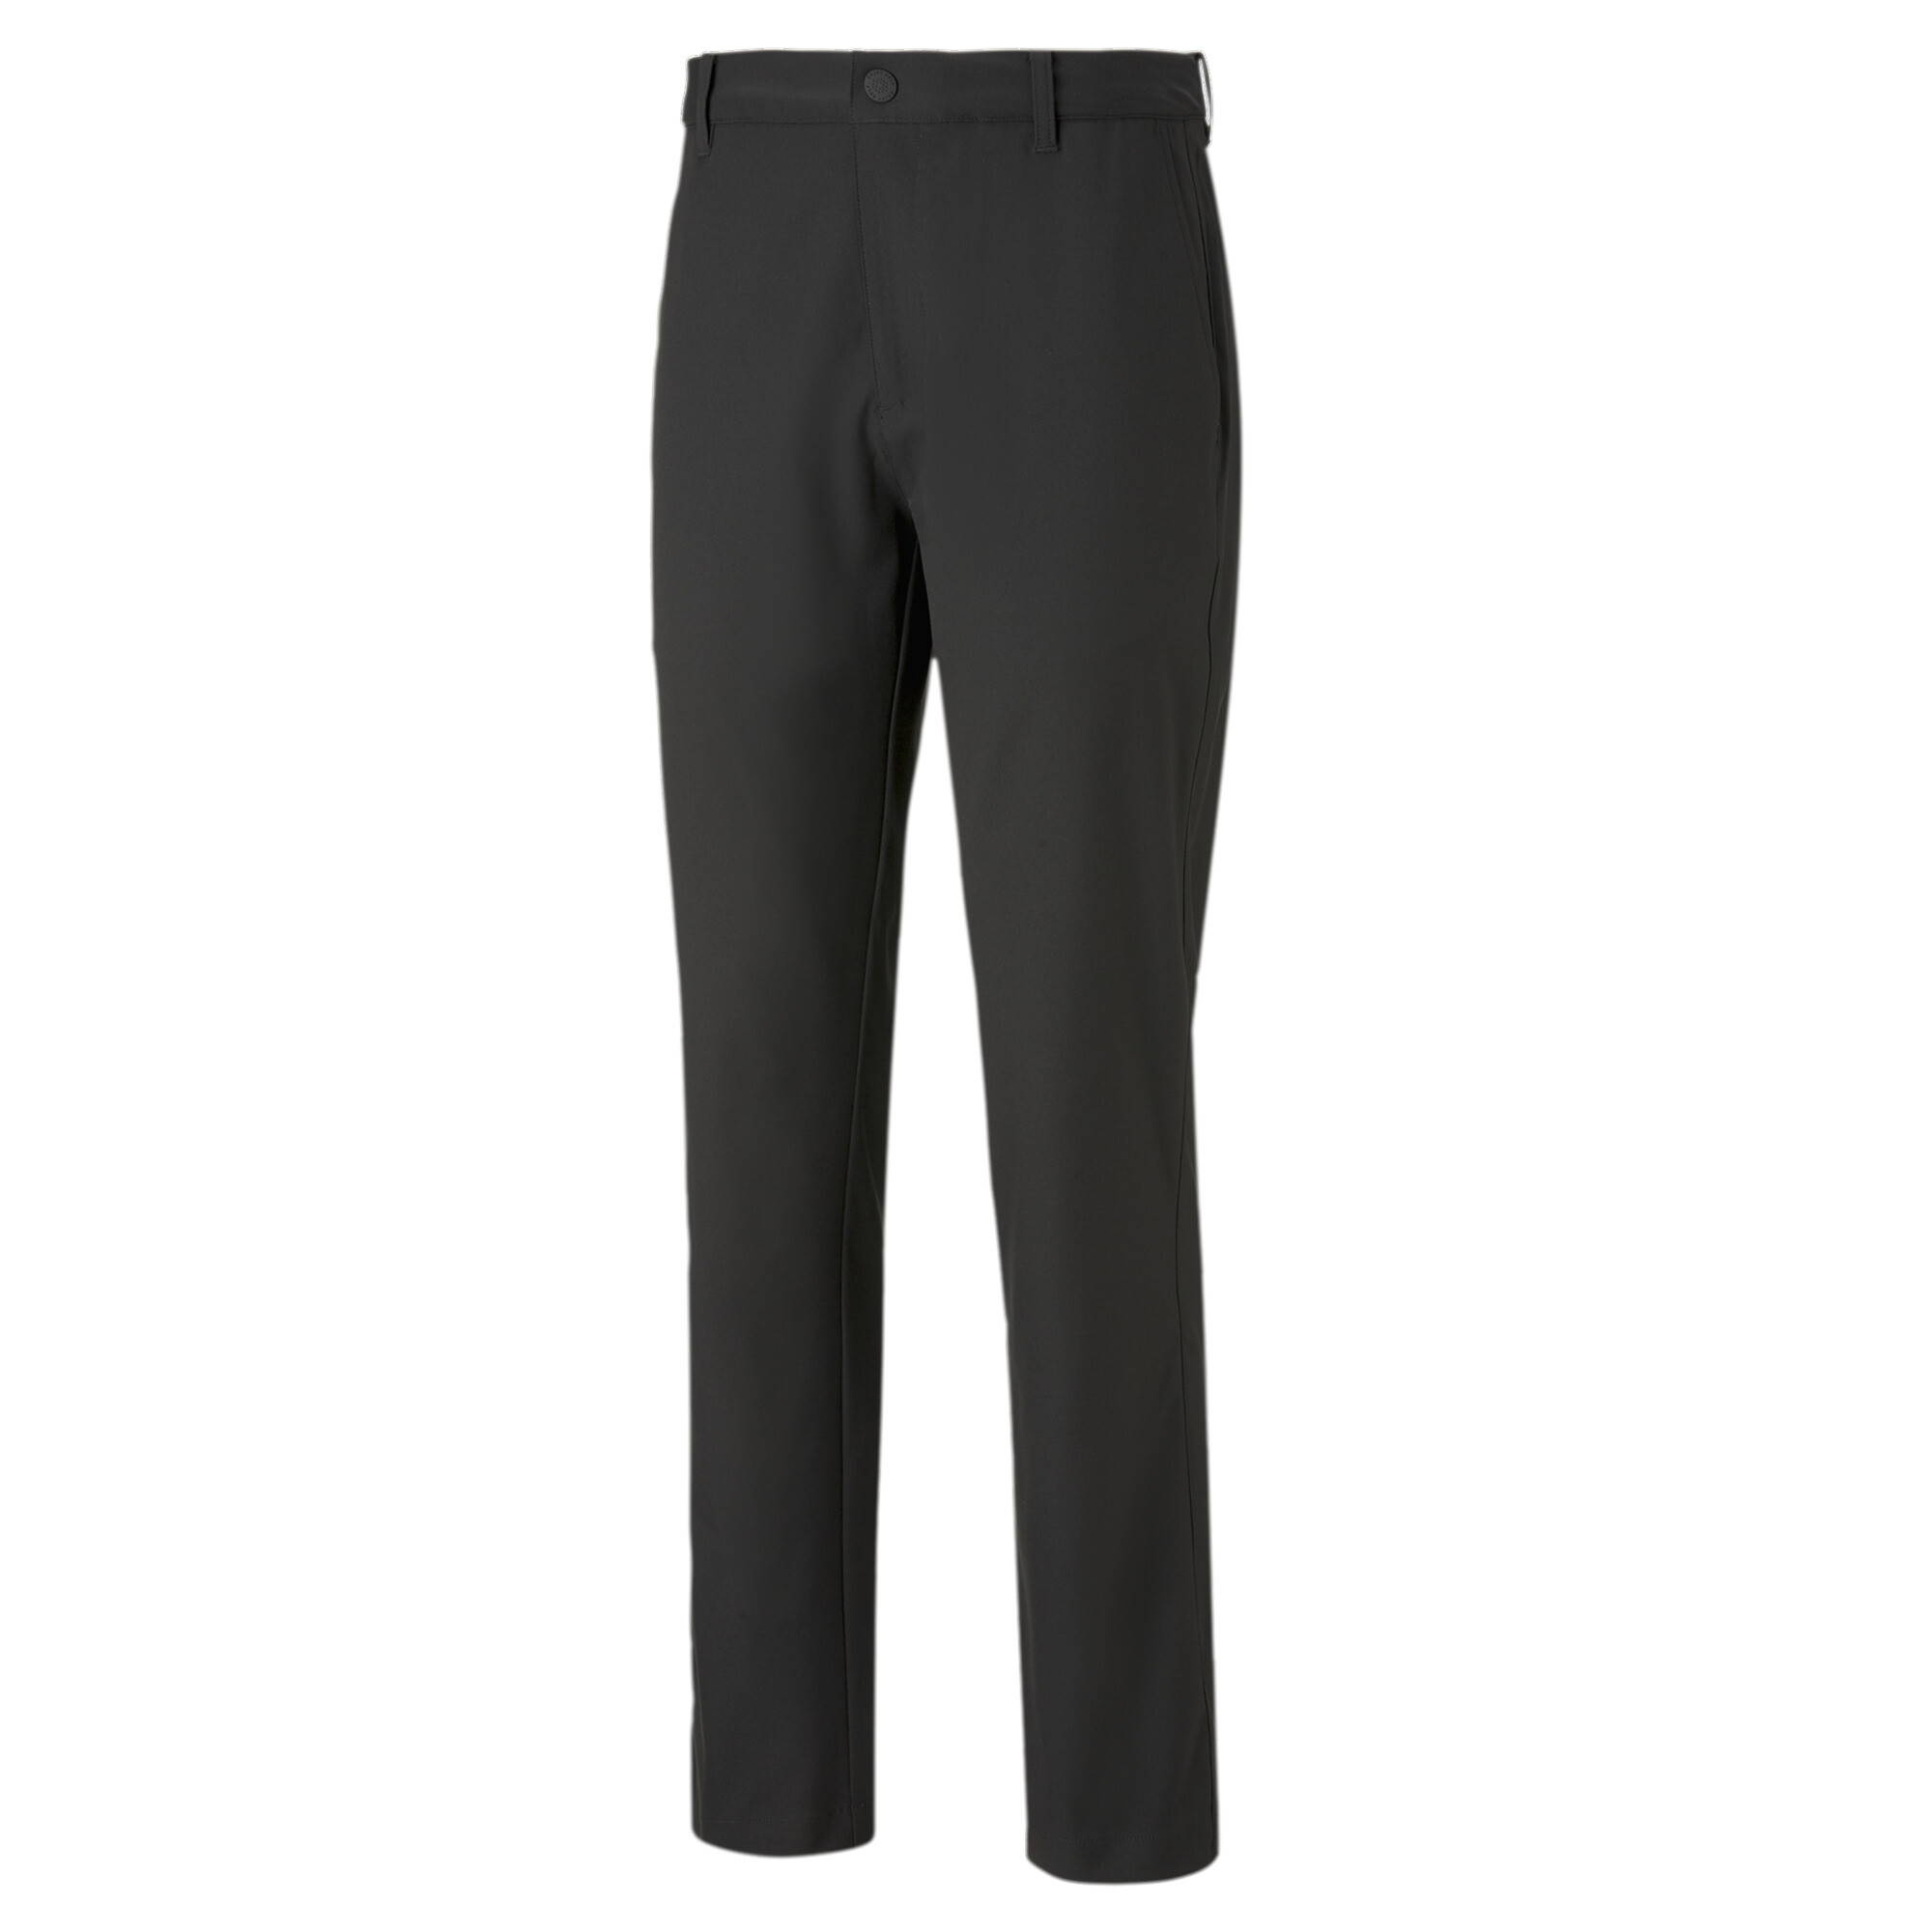 Men's Puma Dealer Golf Pants, Black, Size 38/32, Clothing